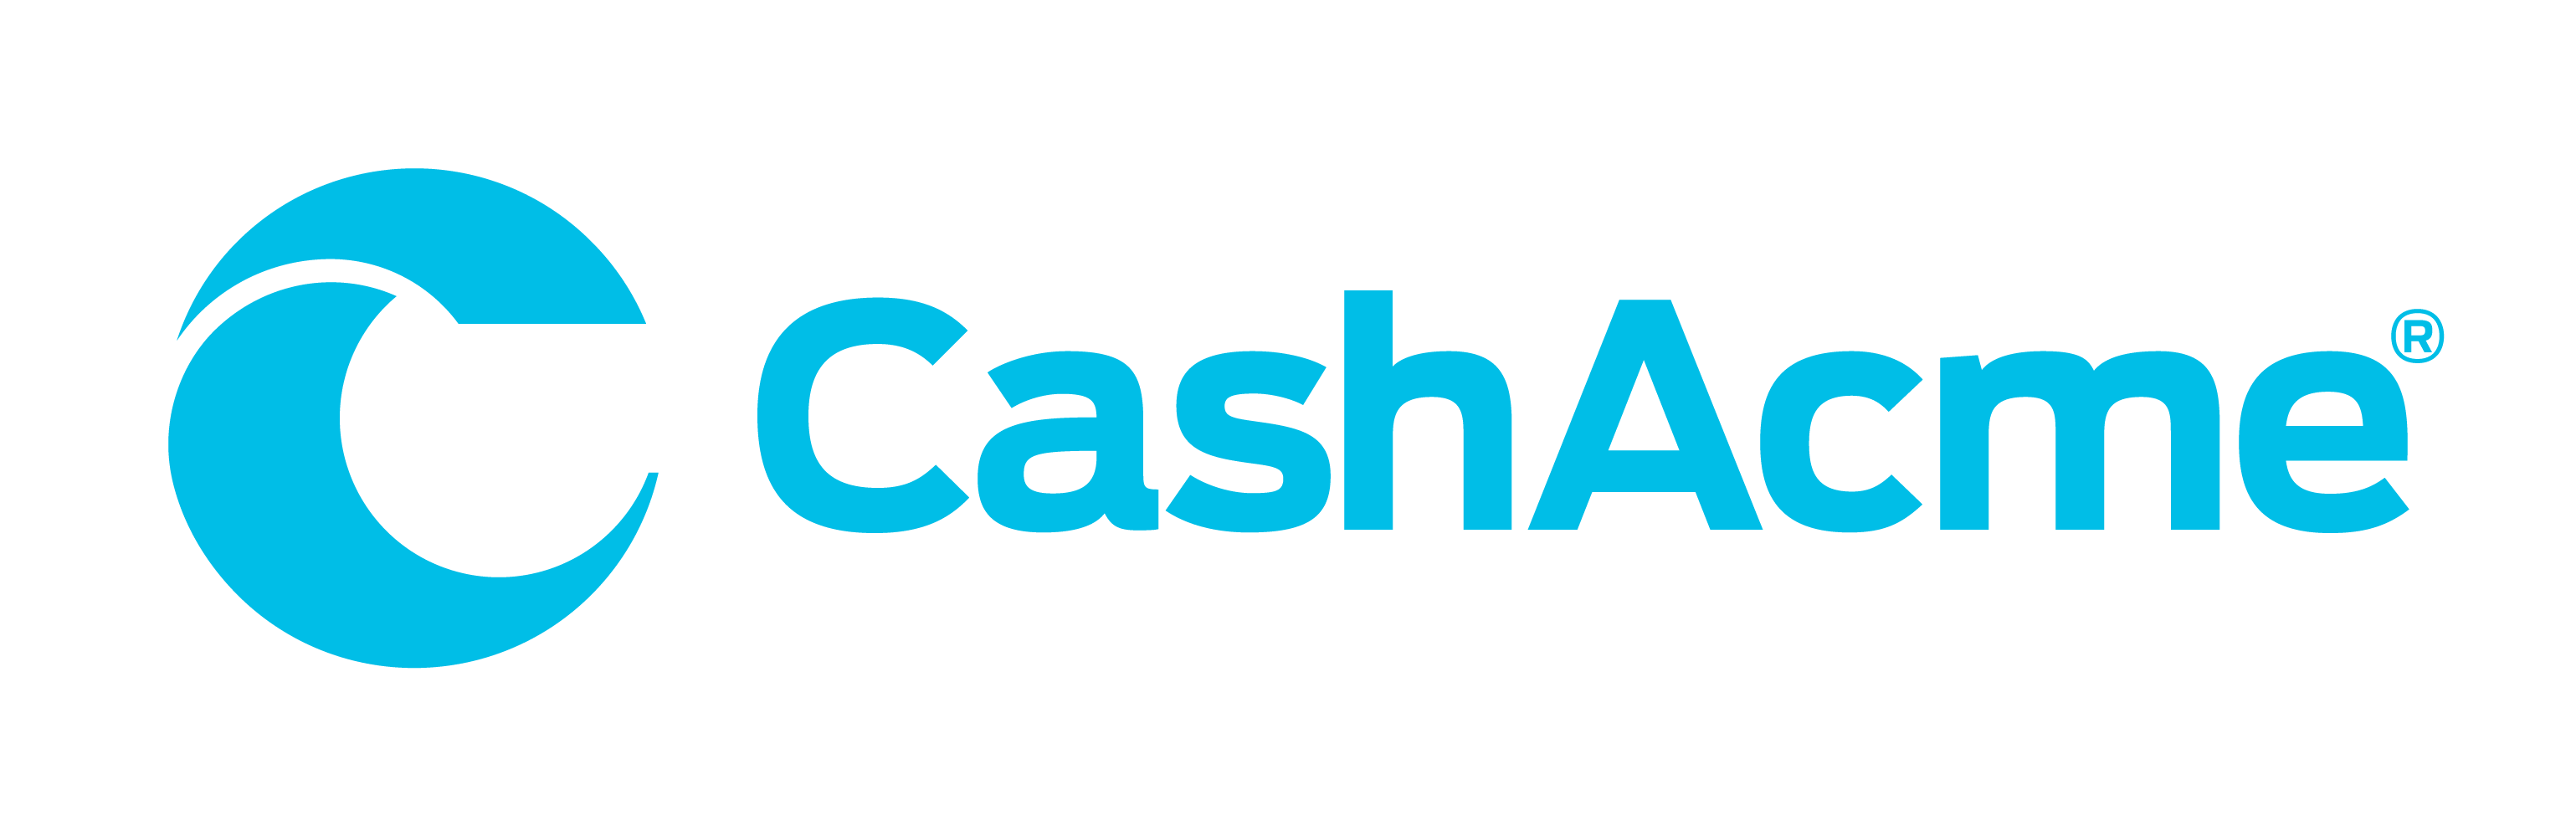 CashAcme Logo